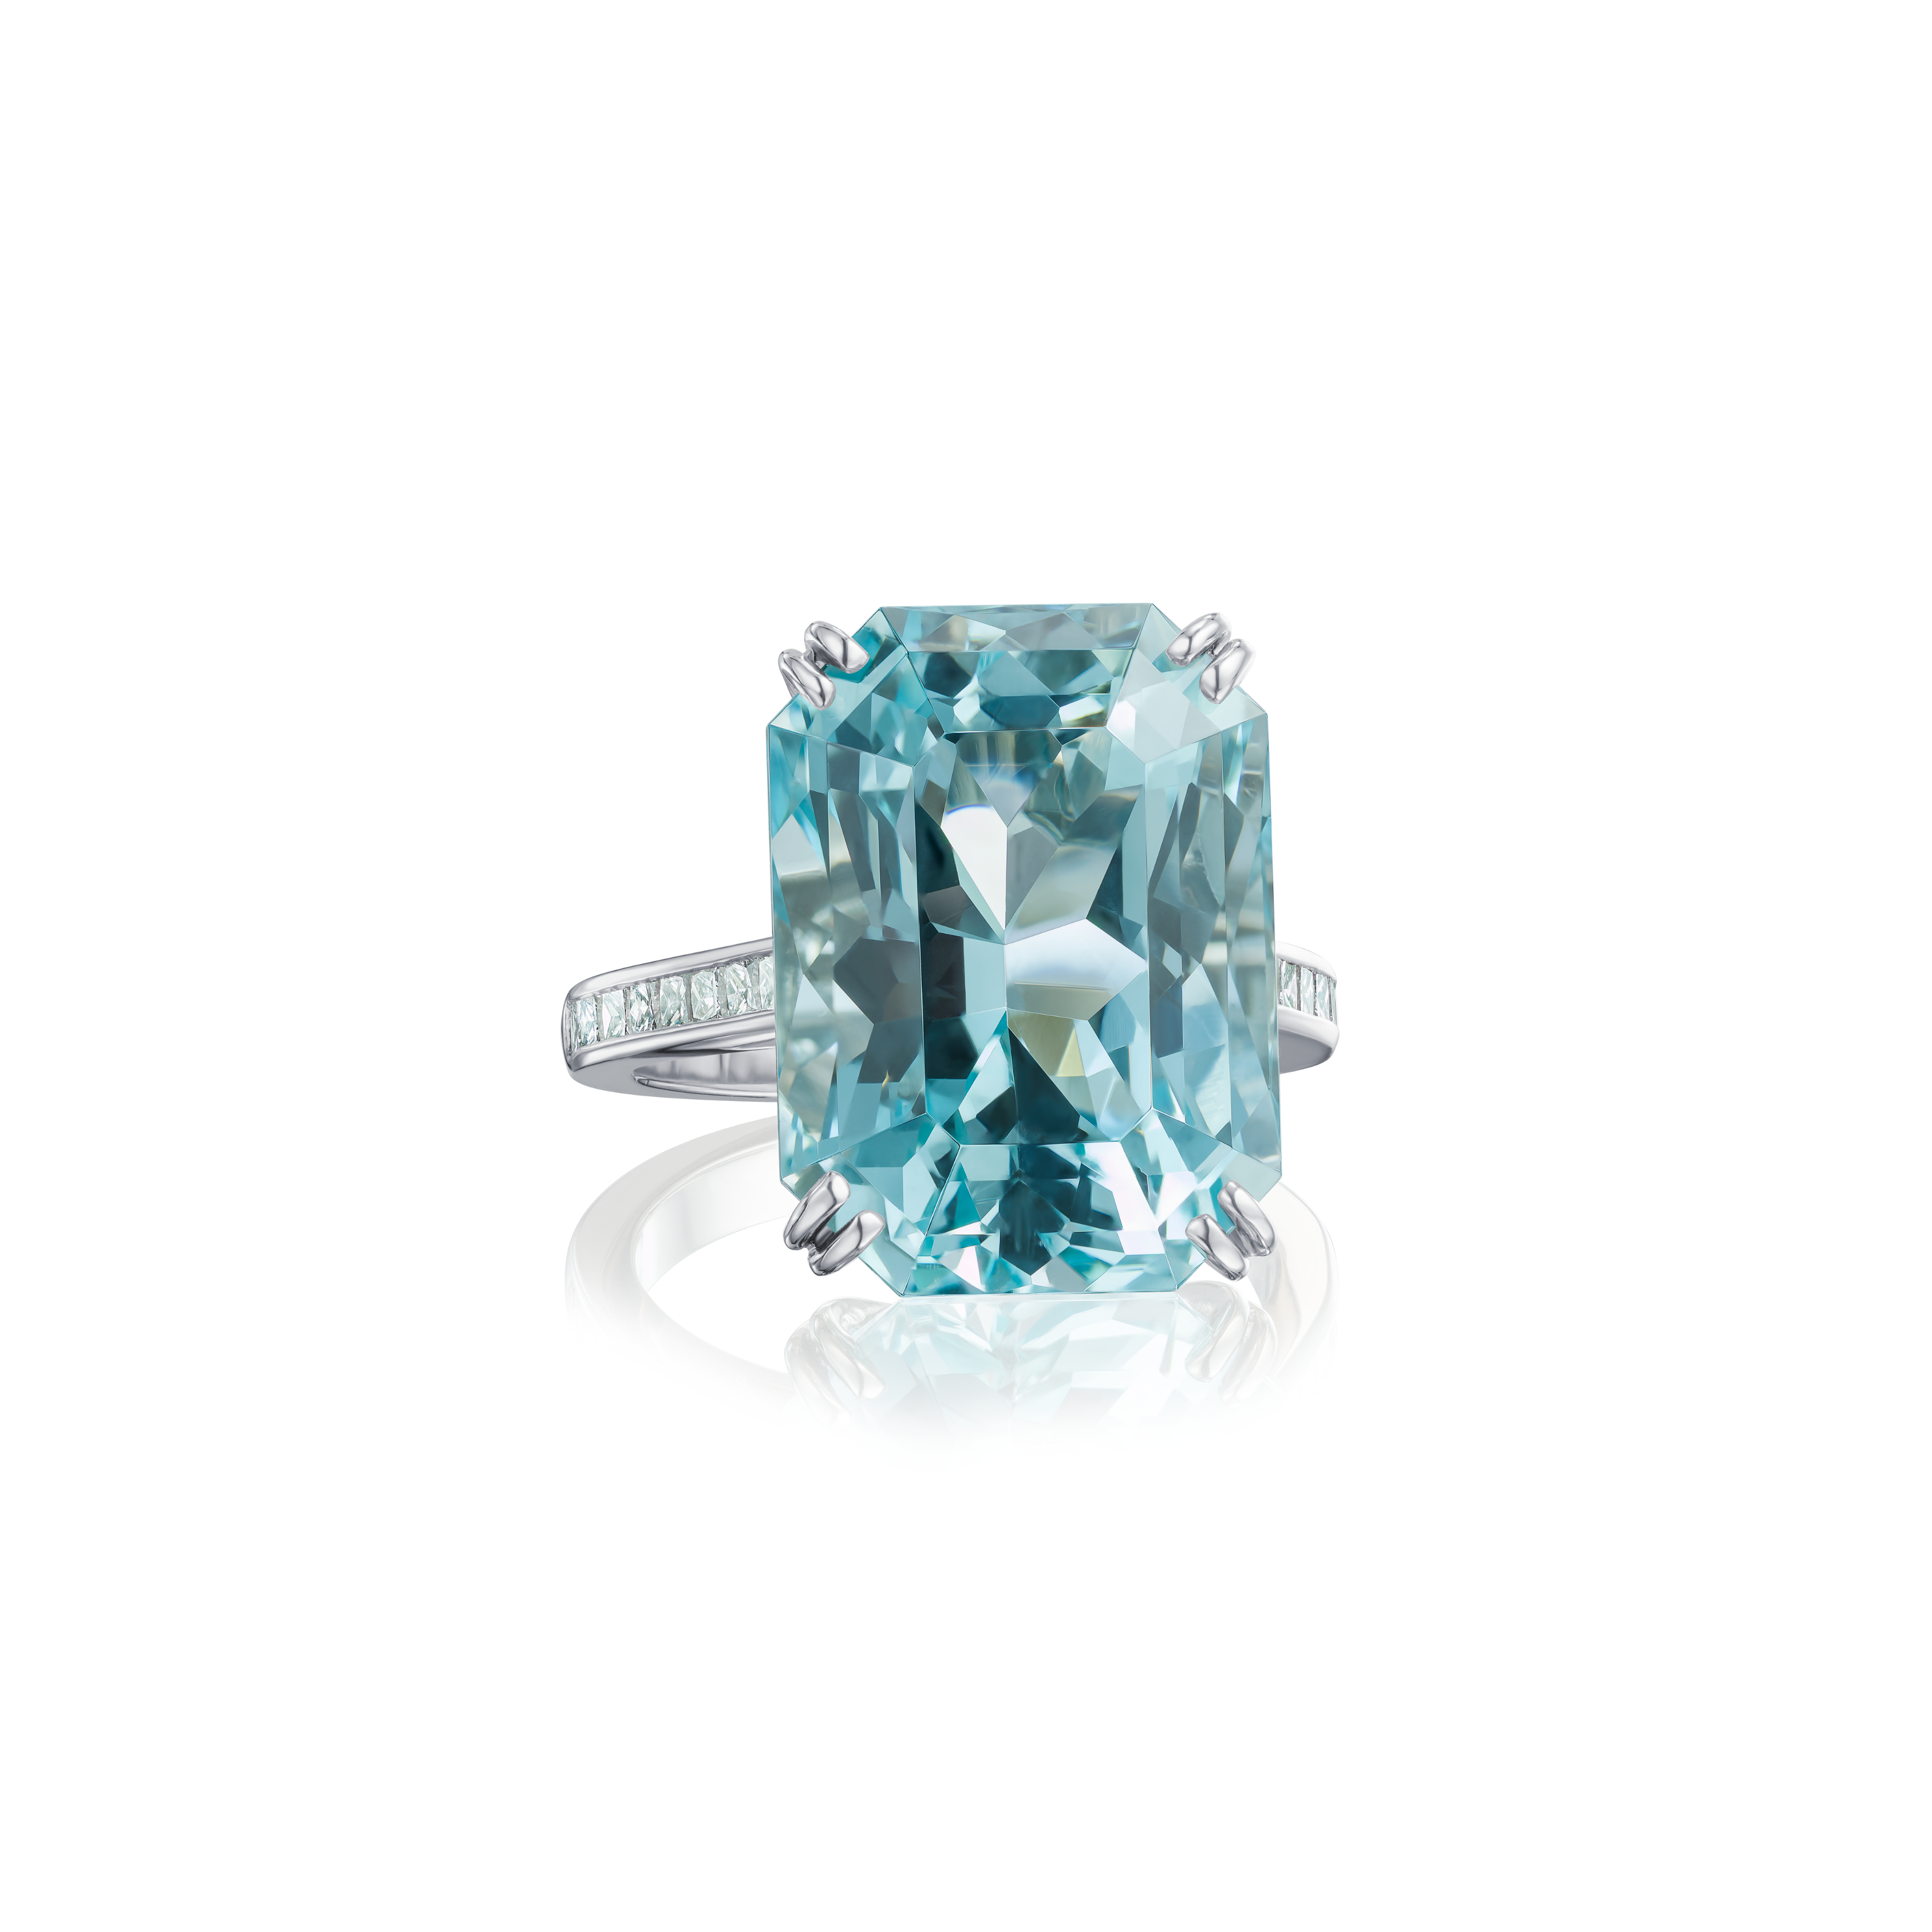 Octagonal Cut Aquamarine and Diamond Ring